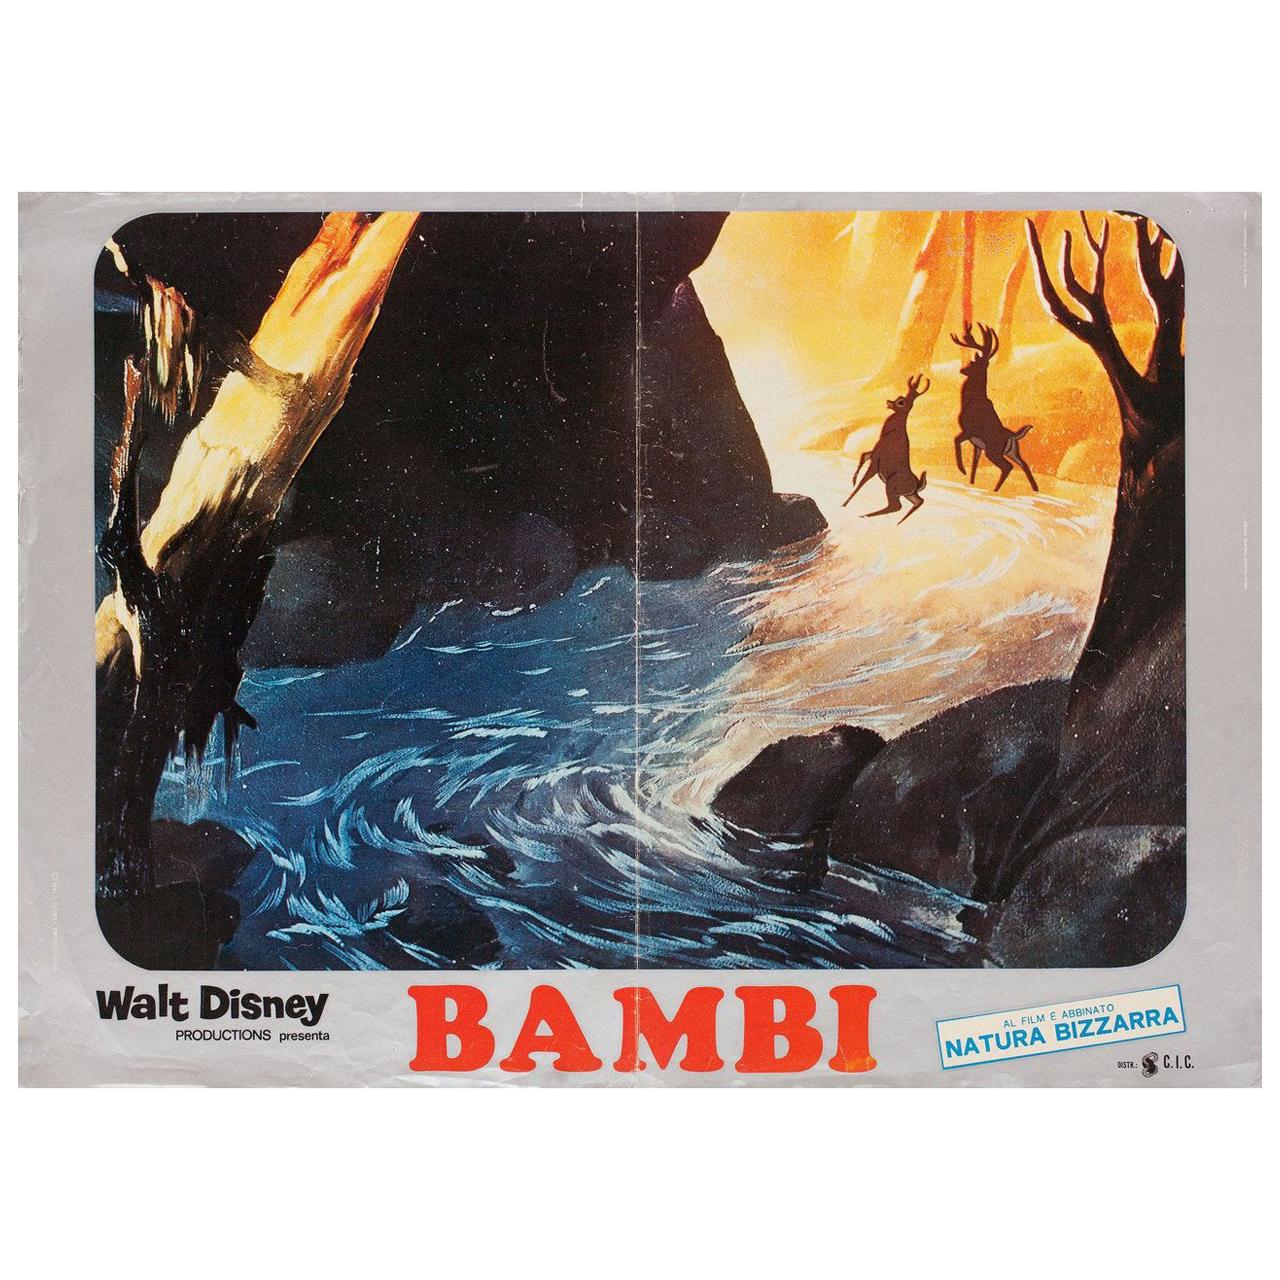 Bambi R1970s Italian Fotobusta Film Poster